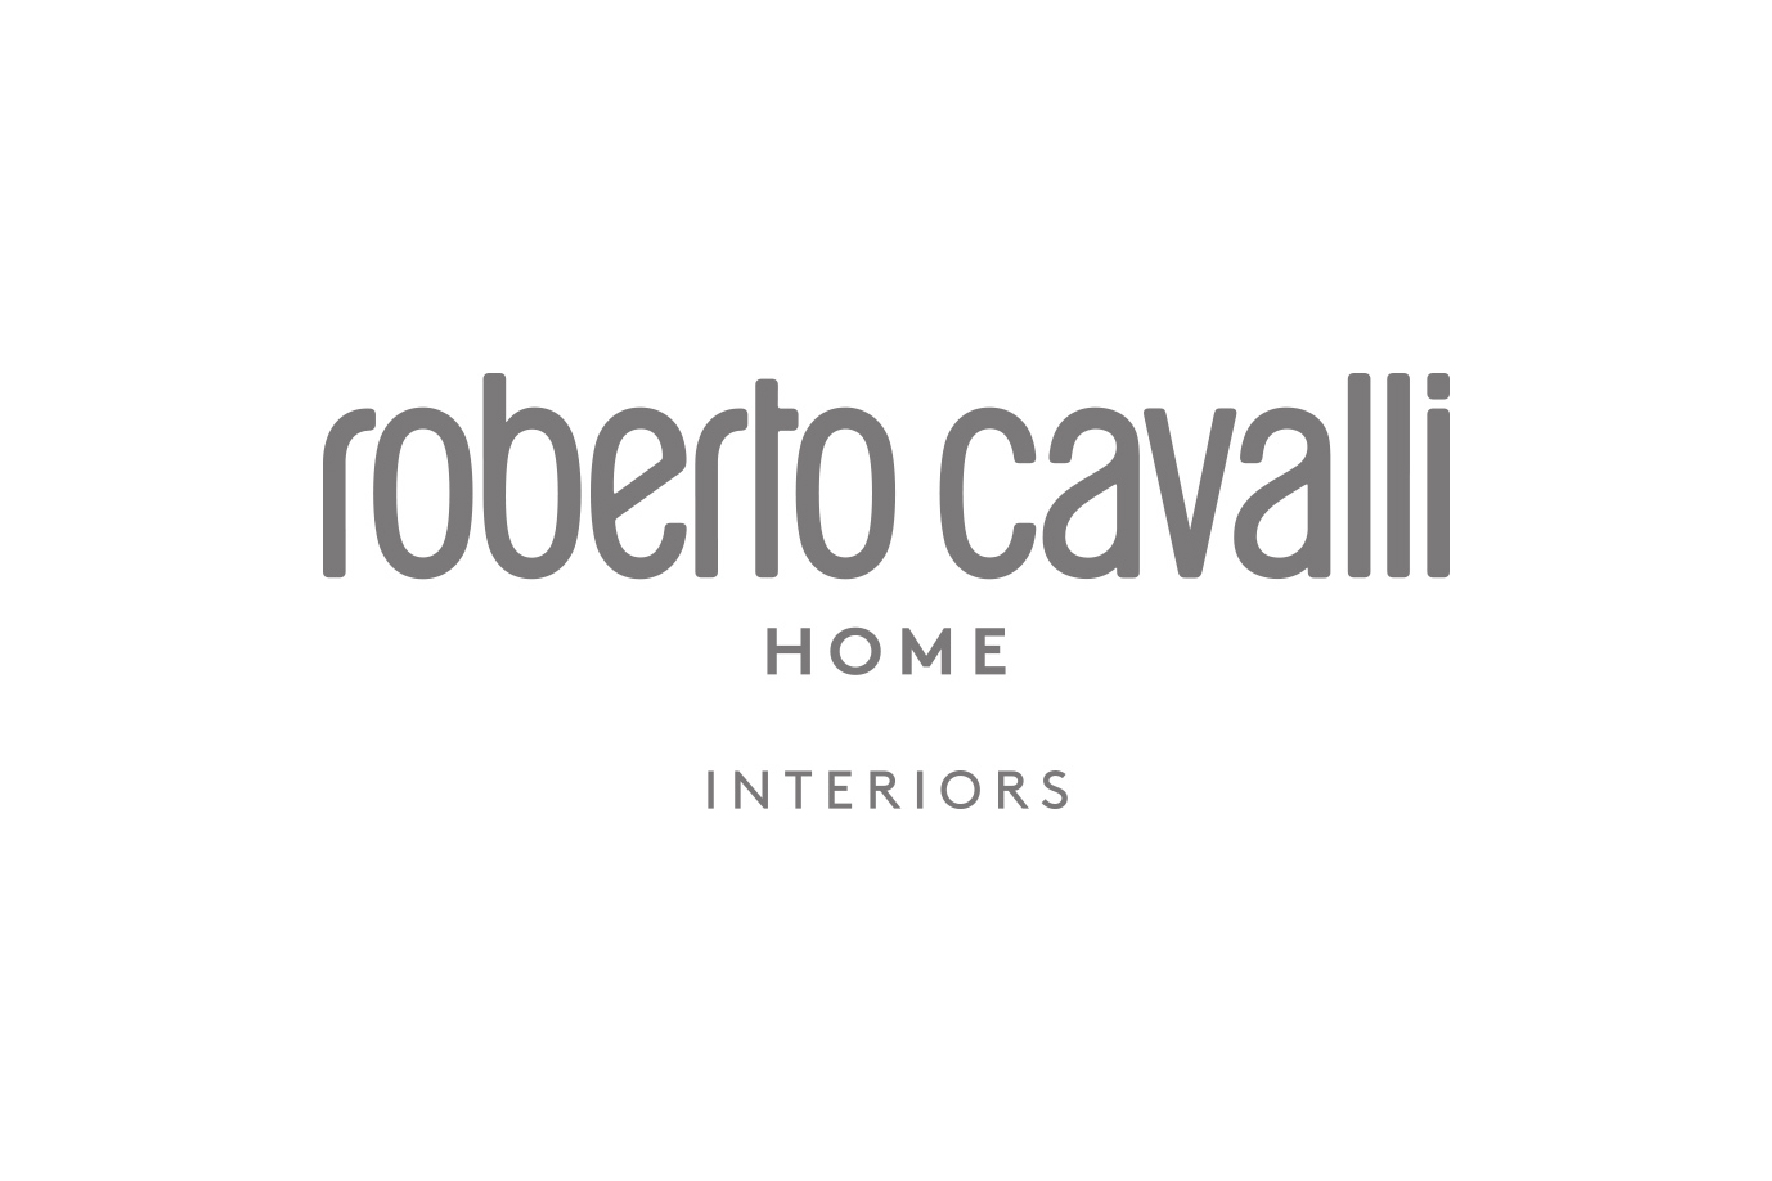 ROBERTO CAVALLI HOME INTERIORS DESIGN